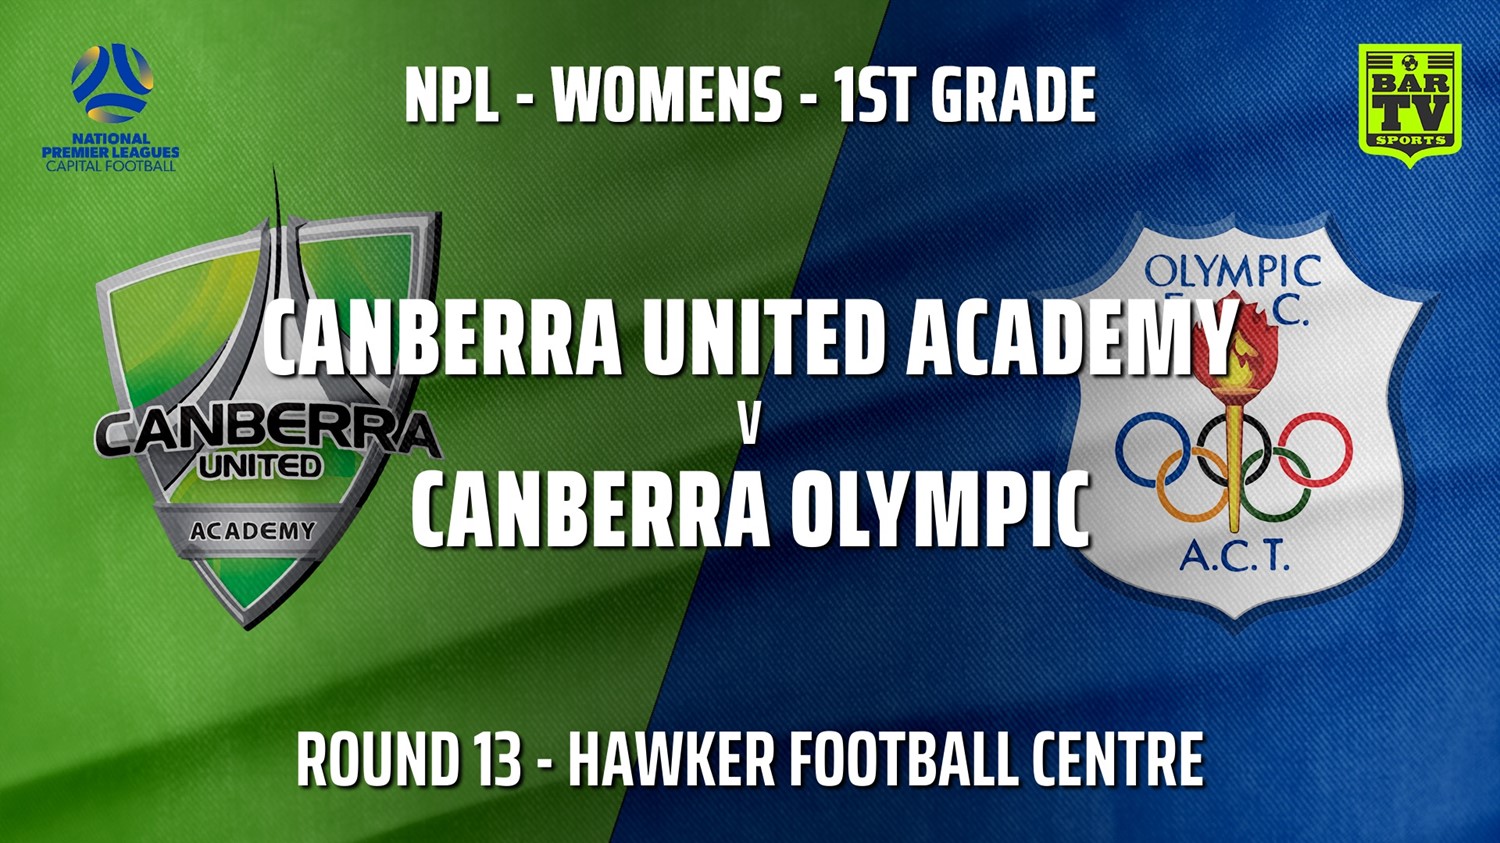 210711-Capital Womens Round 13 - Canberra United Academy v Canberra Olympic FC (women) Slate Image